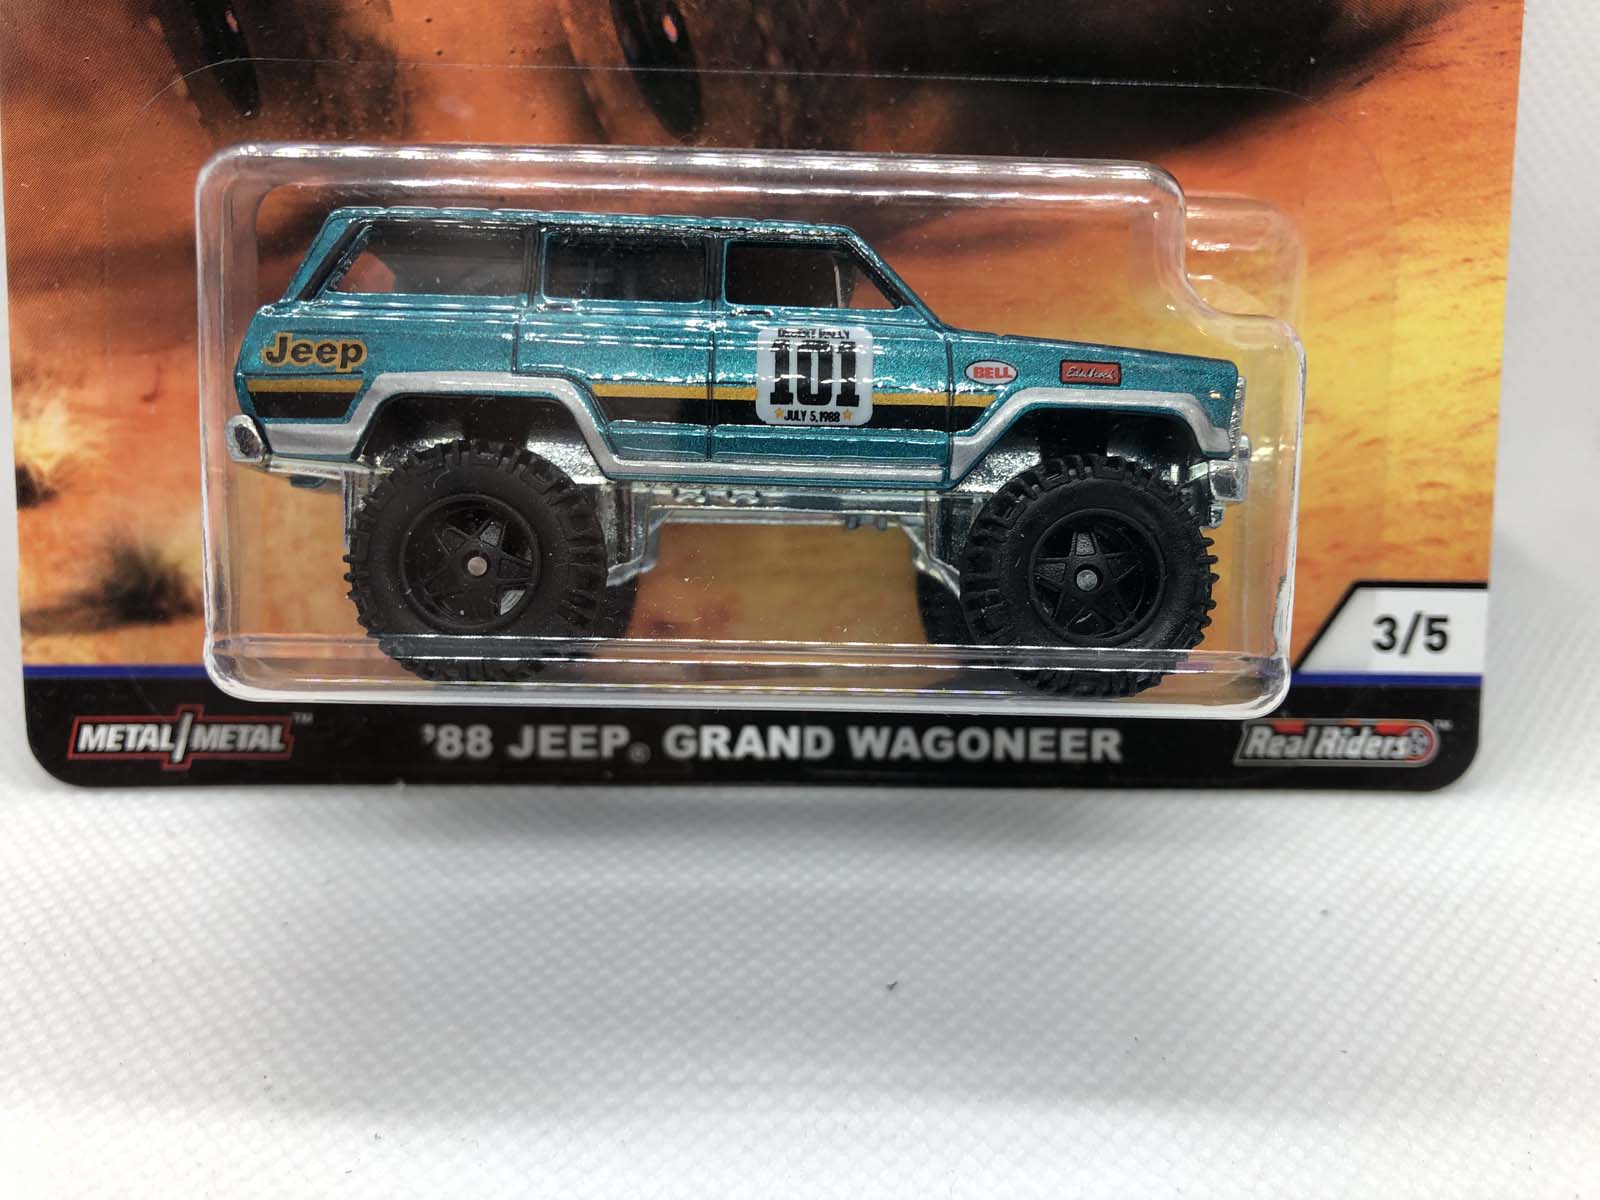 88 Jeep Grand Wagoneer